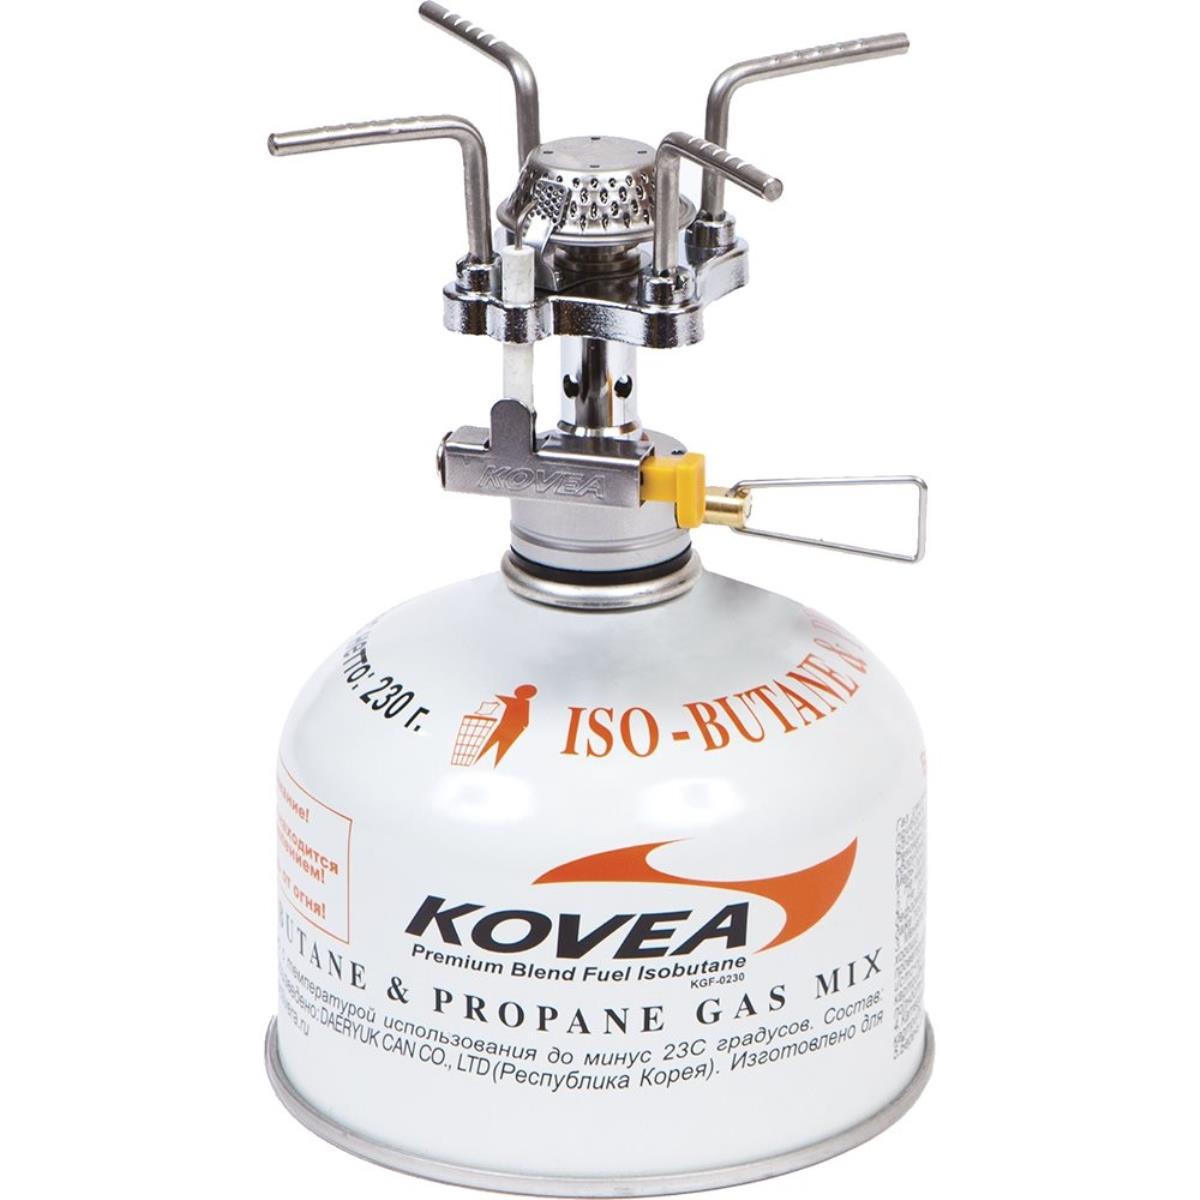 Горелка газовая (KB-0409) Kovea горелка газовая обычная tkb 8911 1 kovea